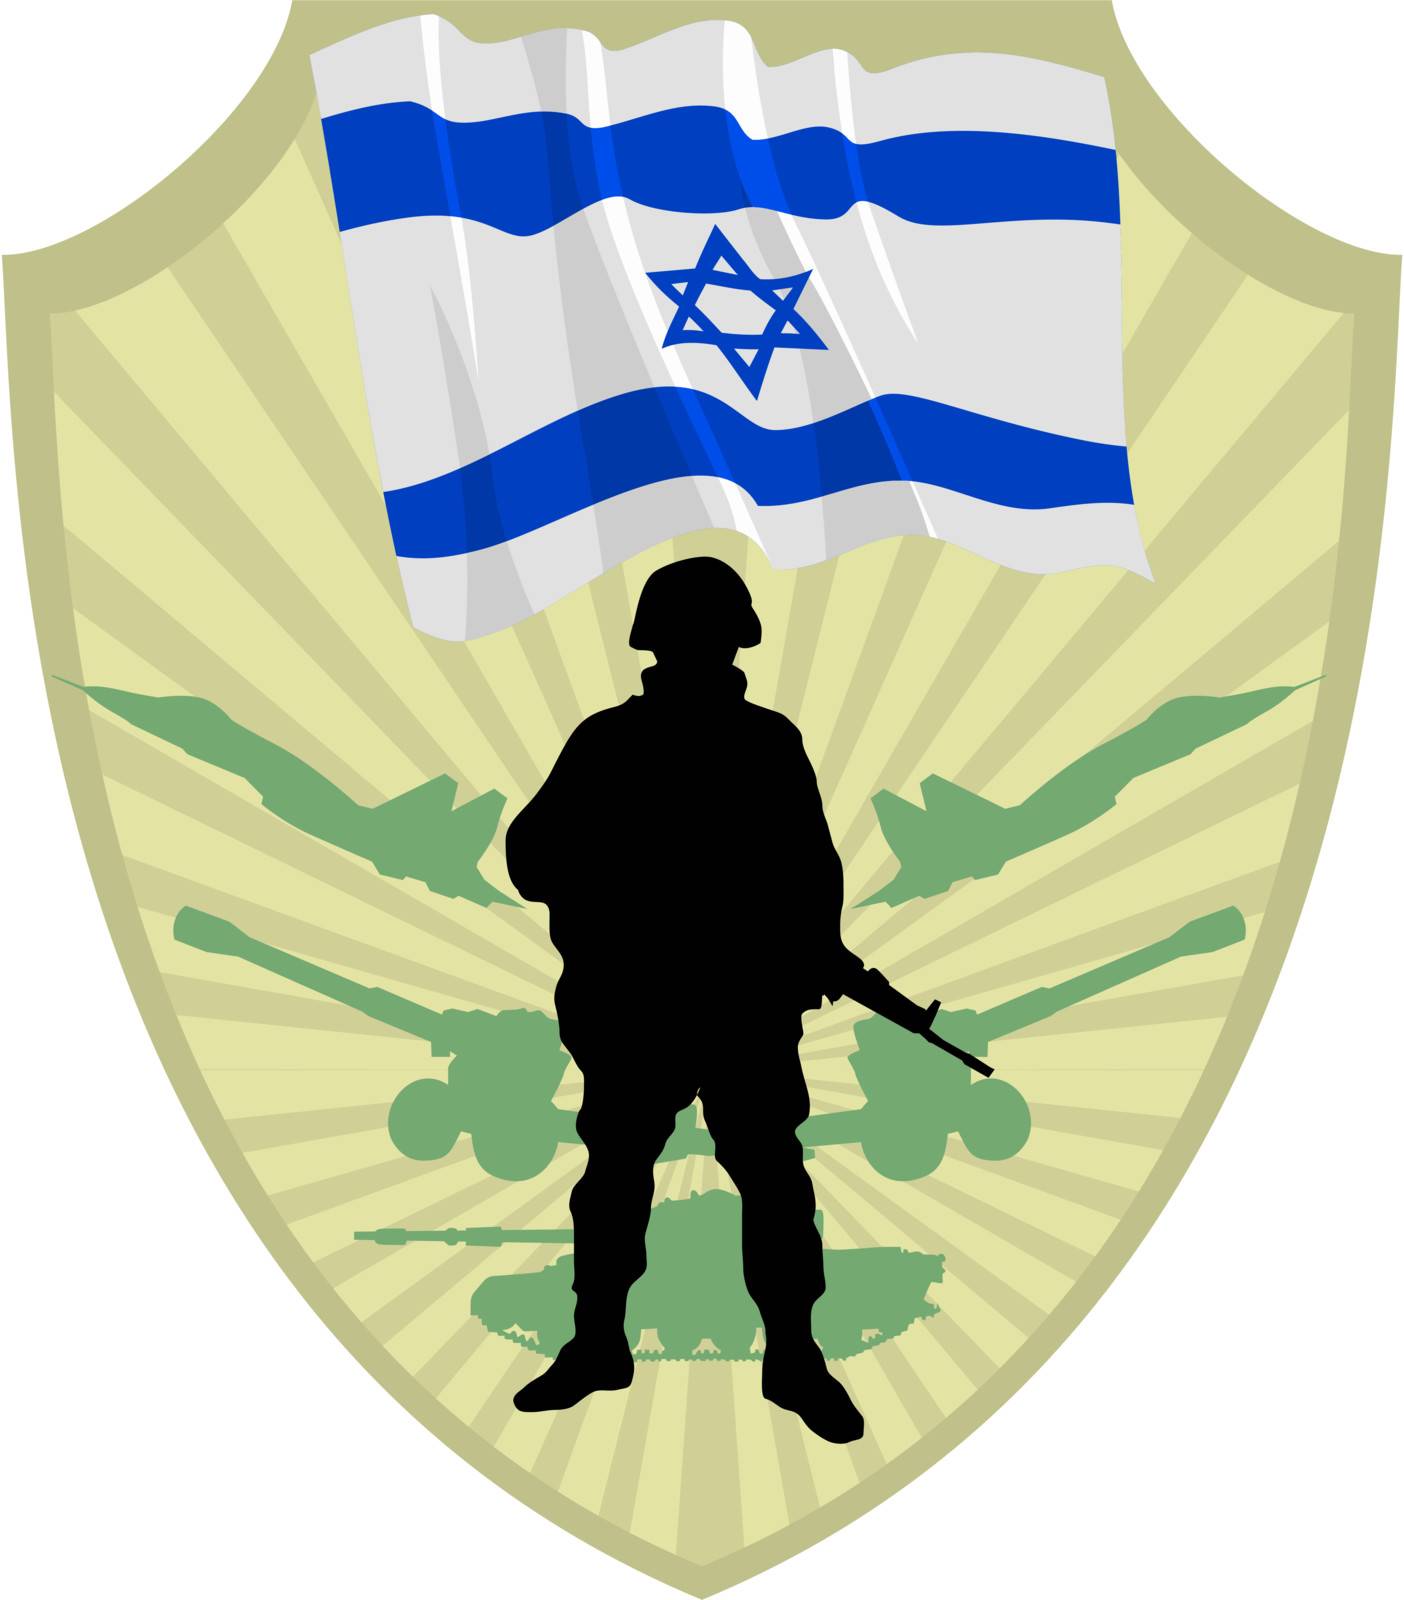 Army of Israel by Perysty